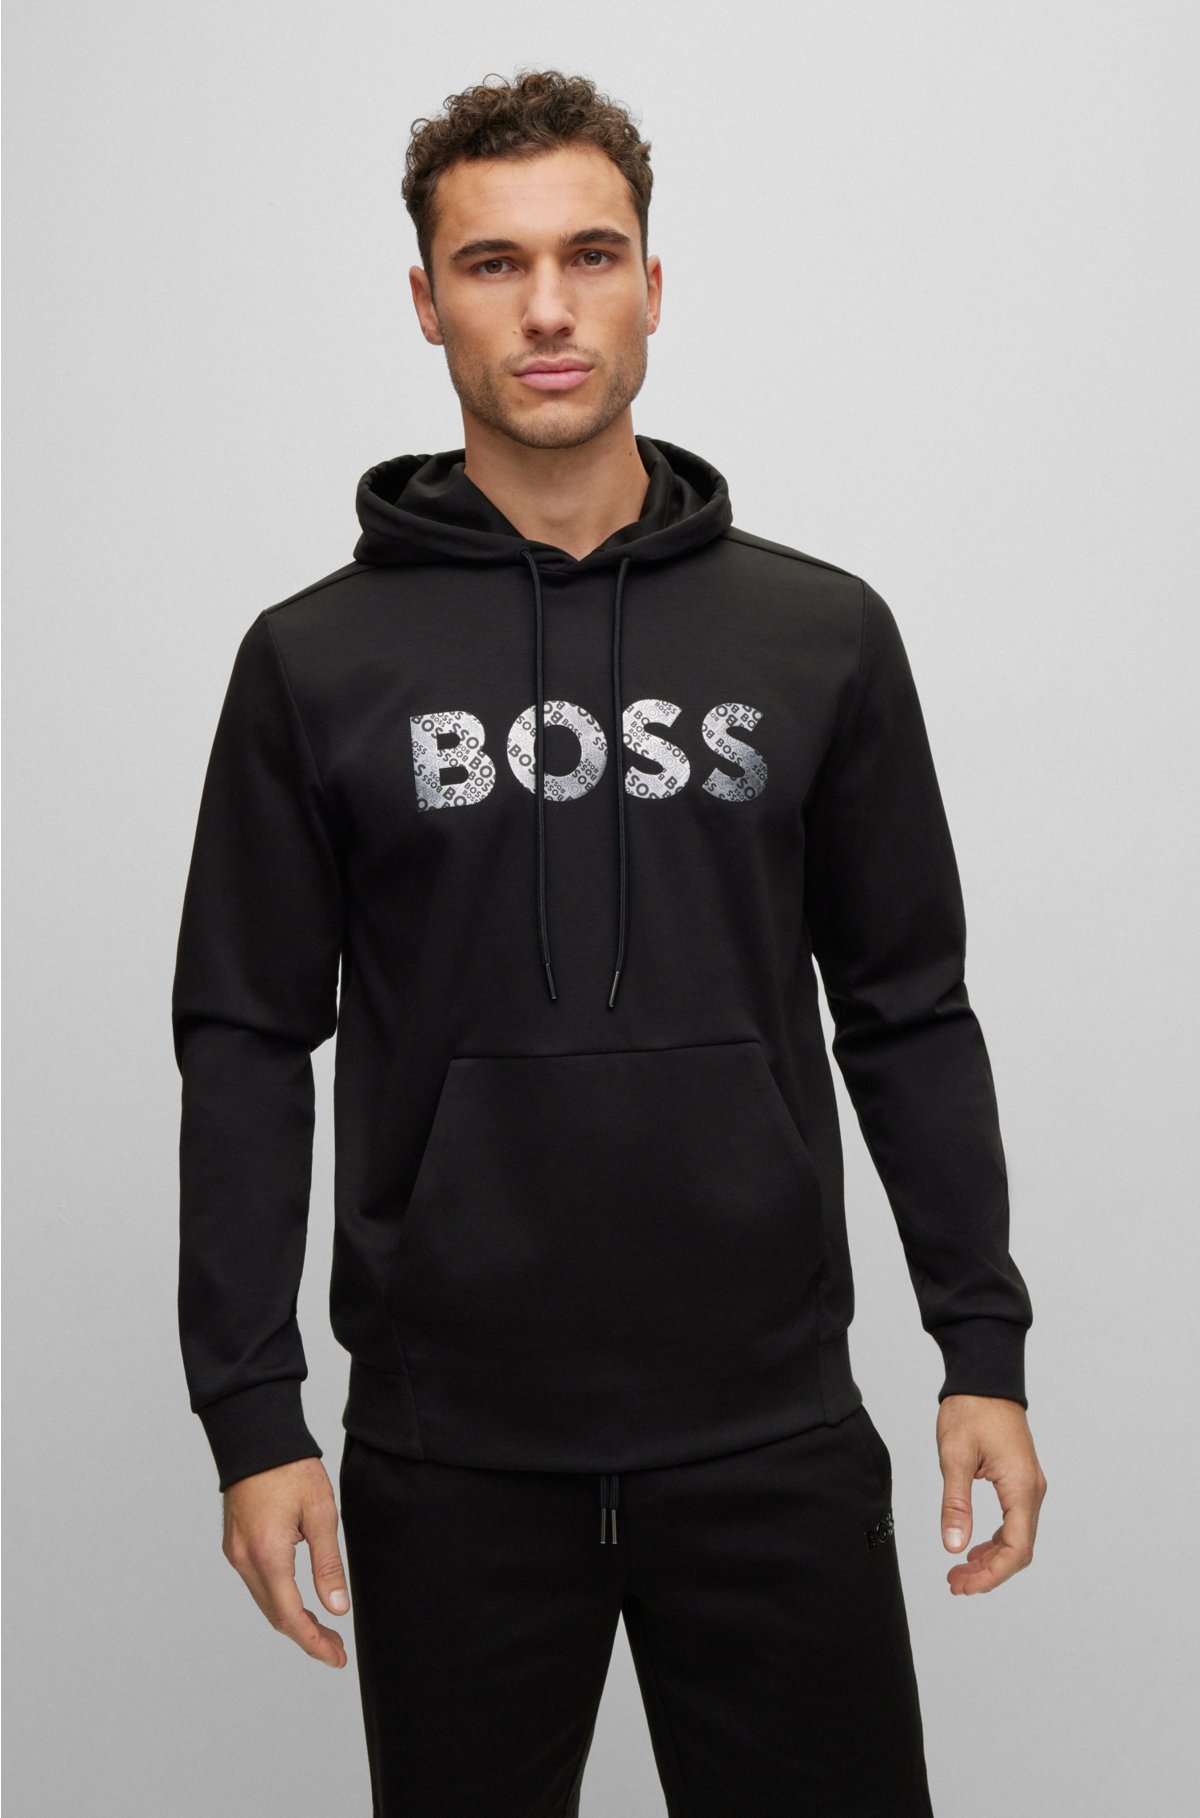 mirror-effect BOSS logo with Cotton-blend hoodie artwork -